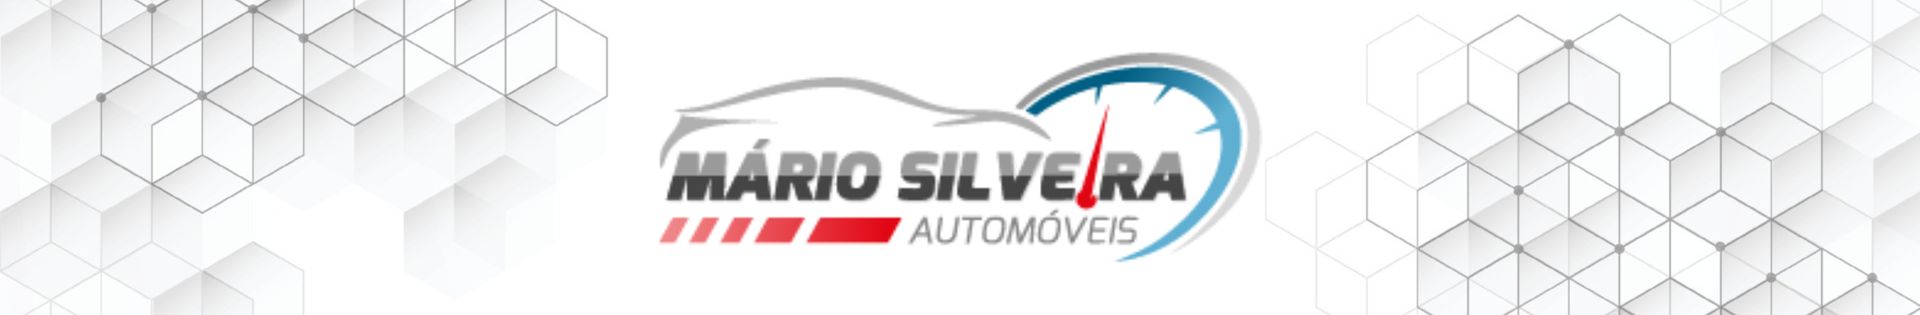 Mário Silveira Automóveis top banner